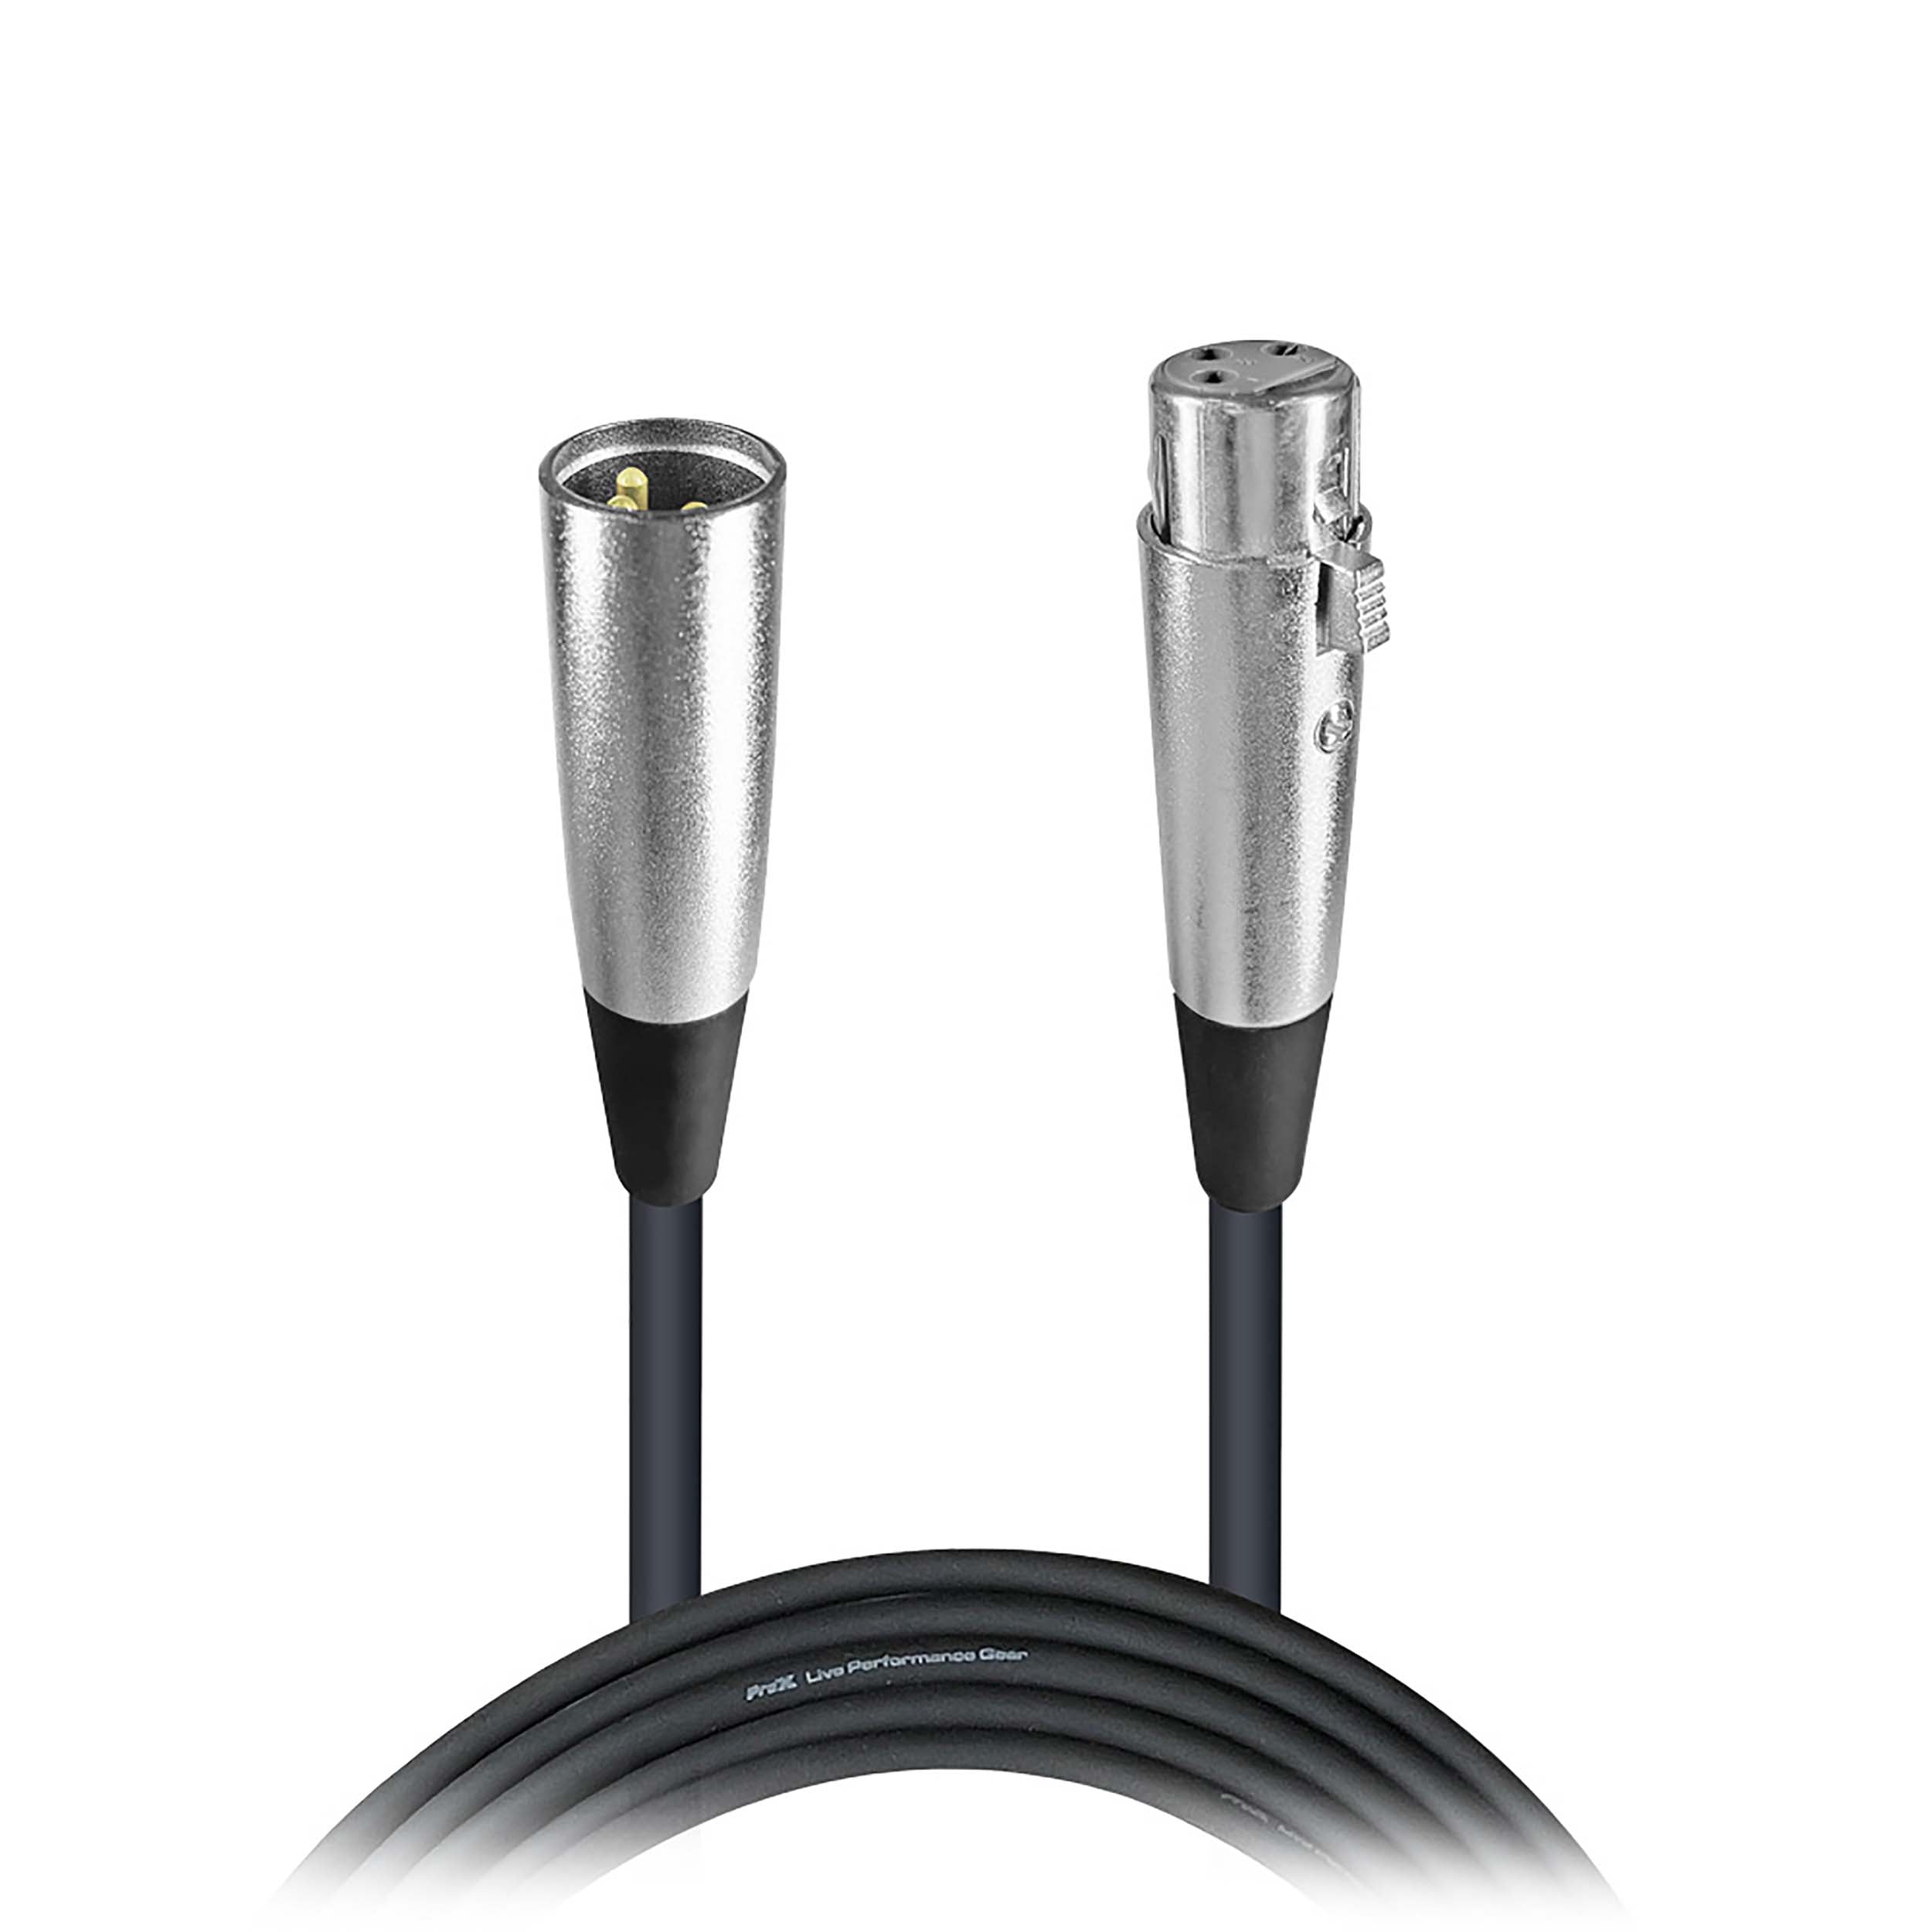 Prox XCP-XLR50 Balanced XLR3-F to XLR3-M Premium Audio-Microphone Cable - 50 Feet by ProX Cases